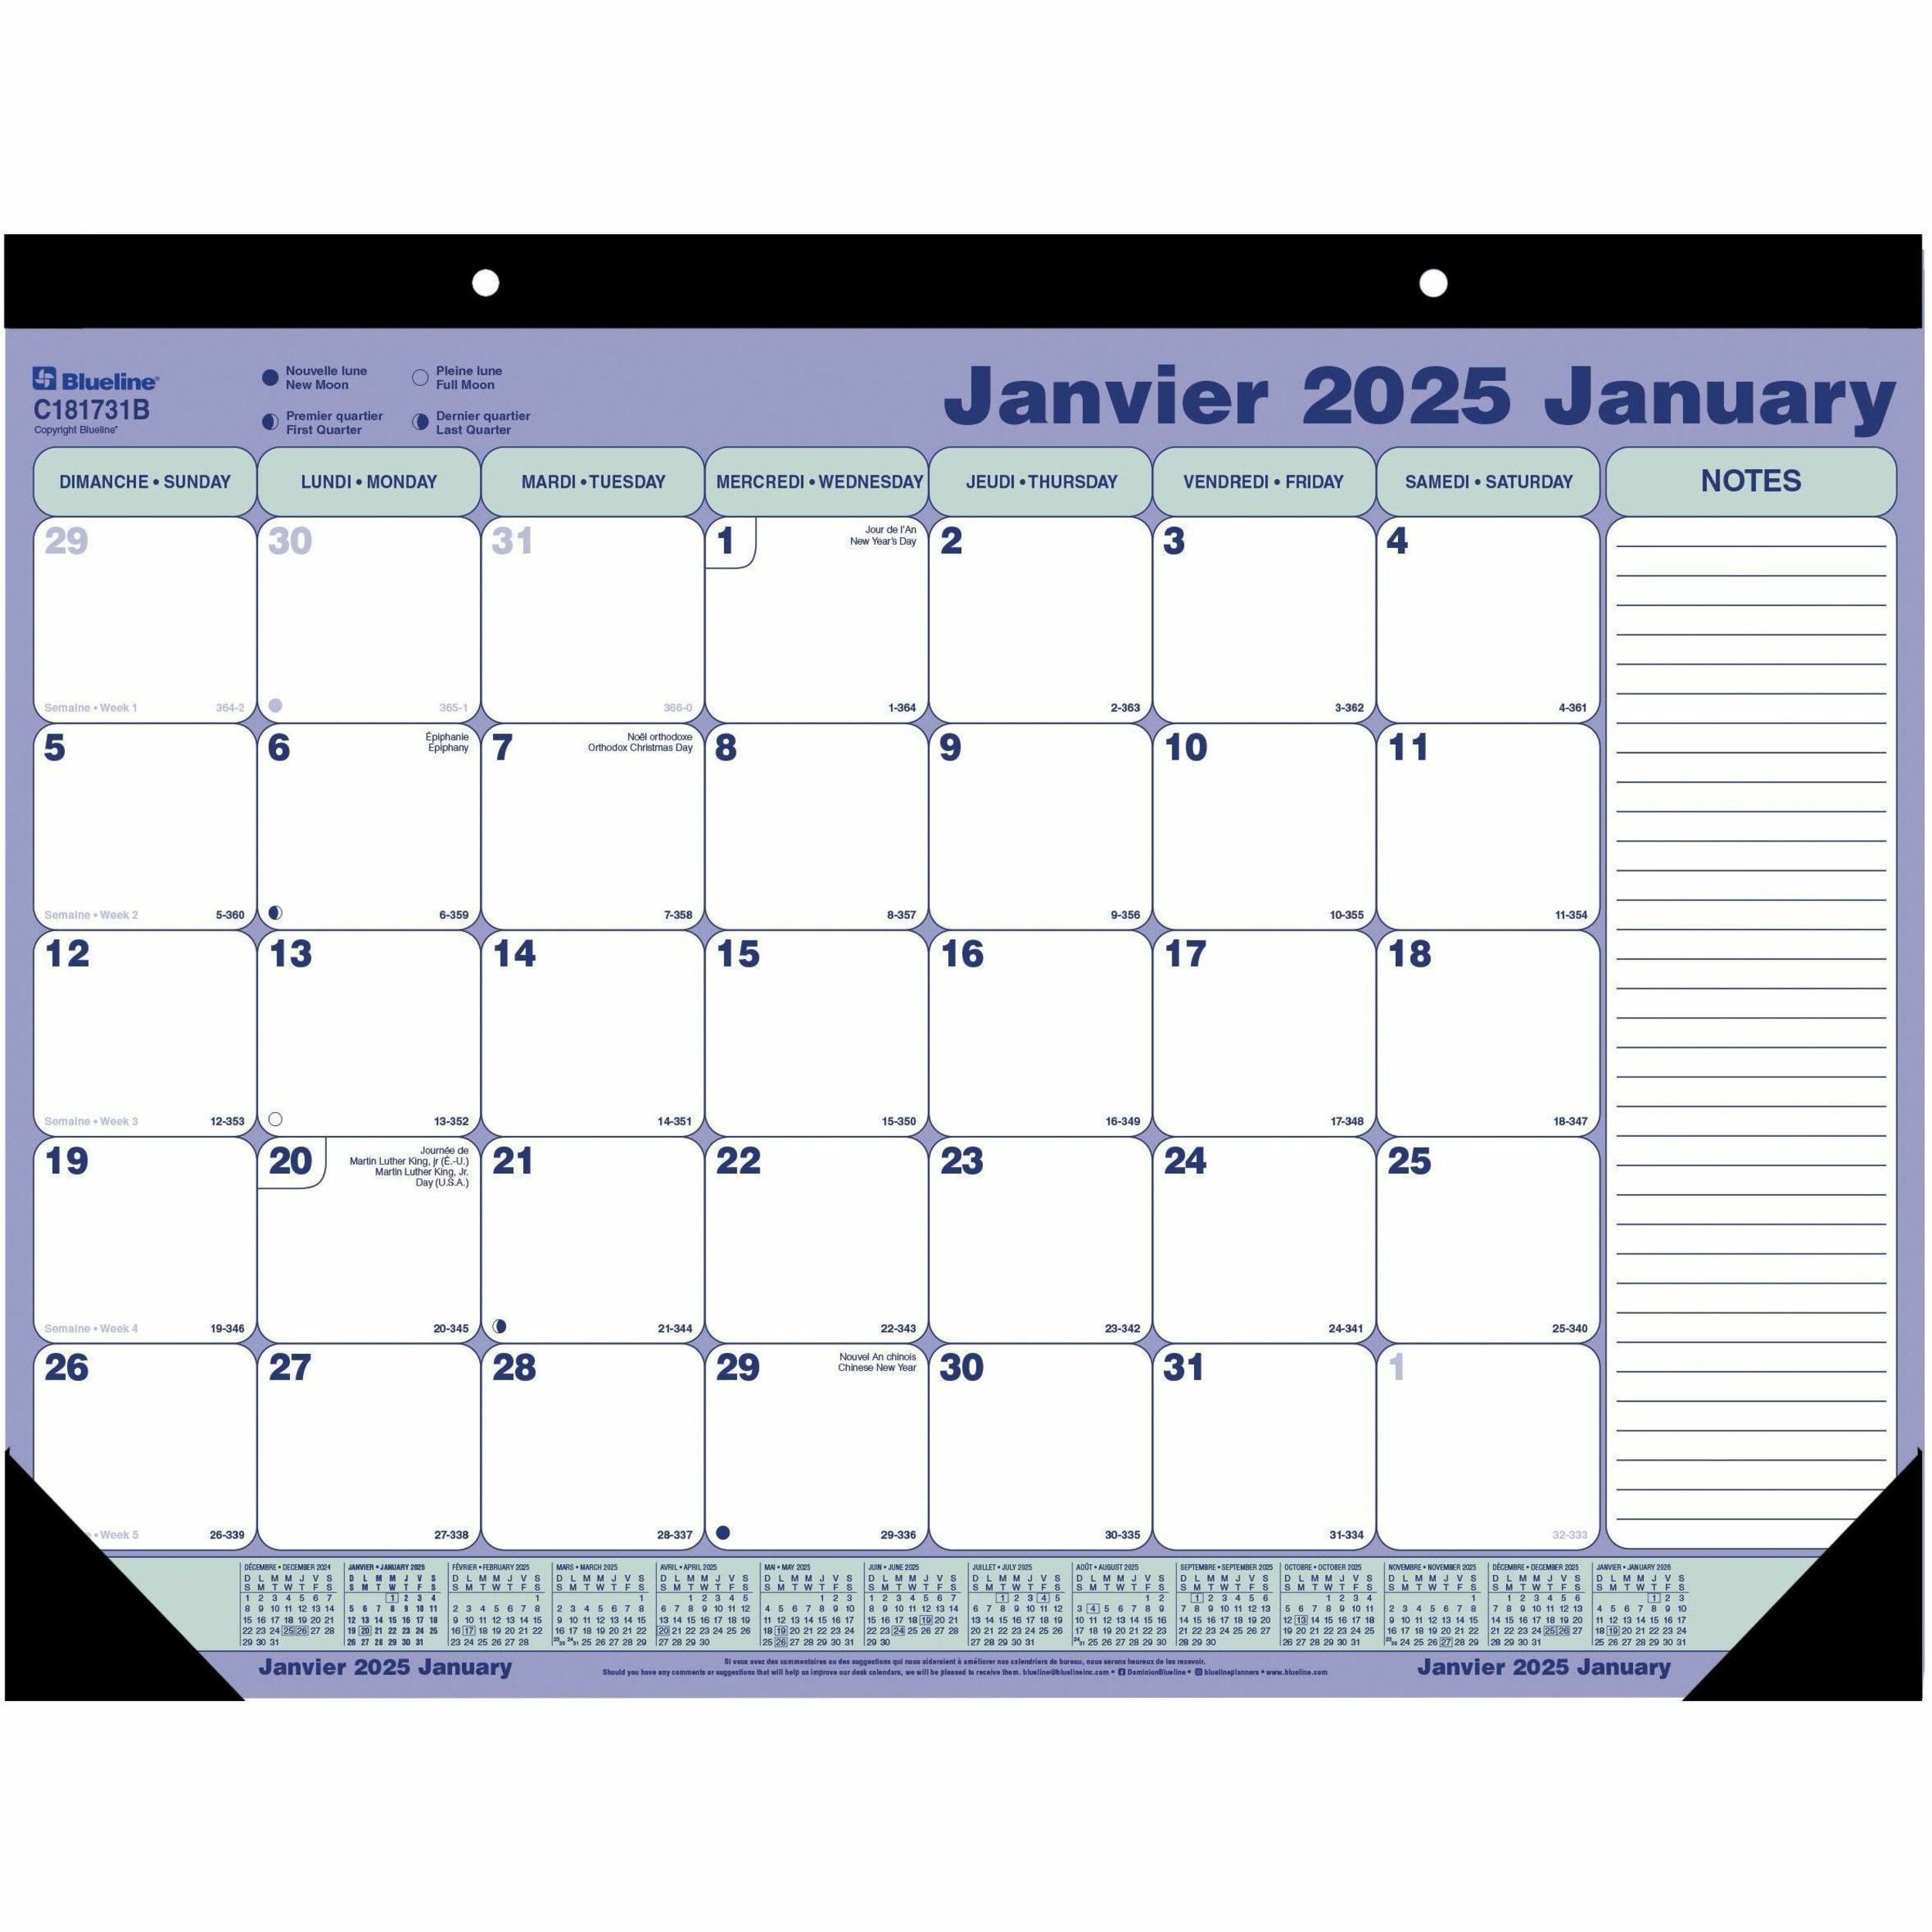 challenge-industries-ltd-office-supplies-calendars-planners